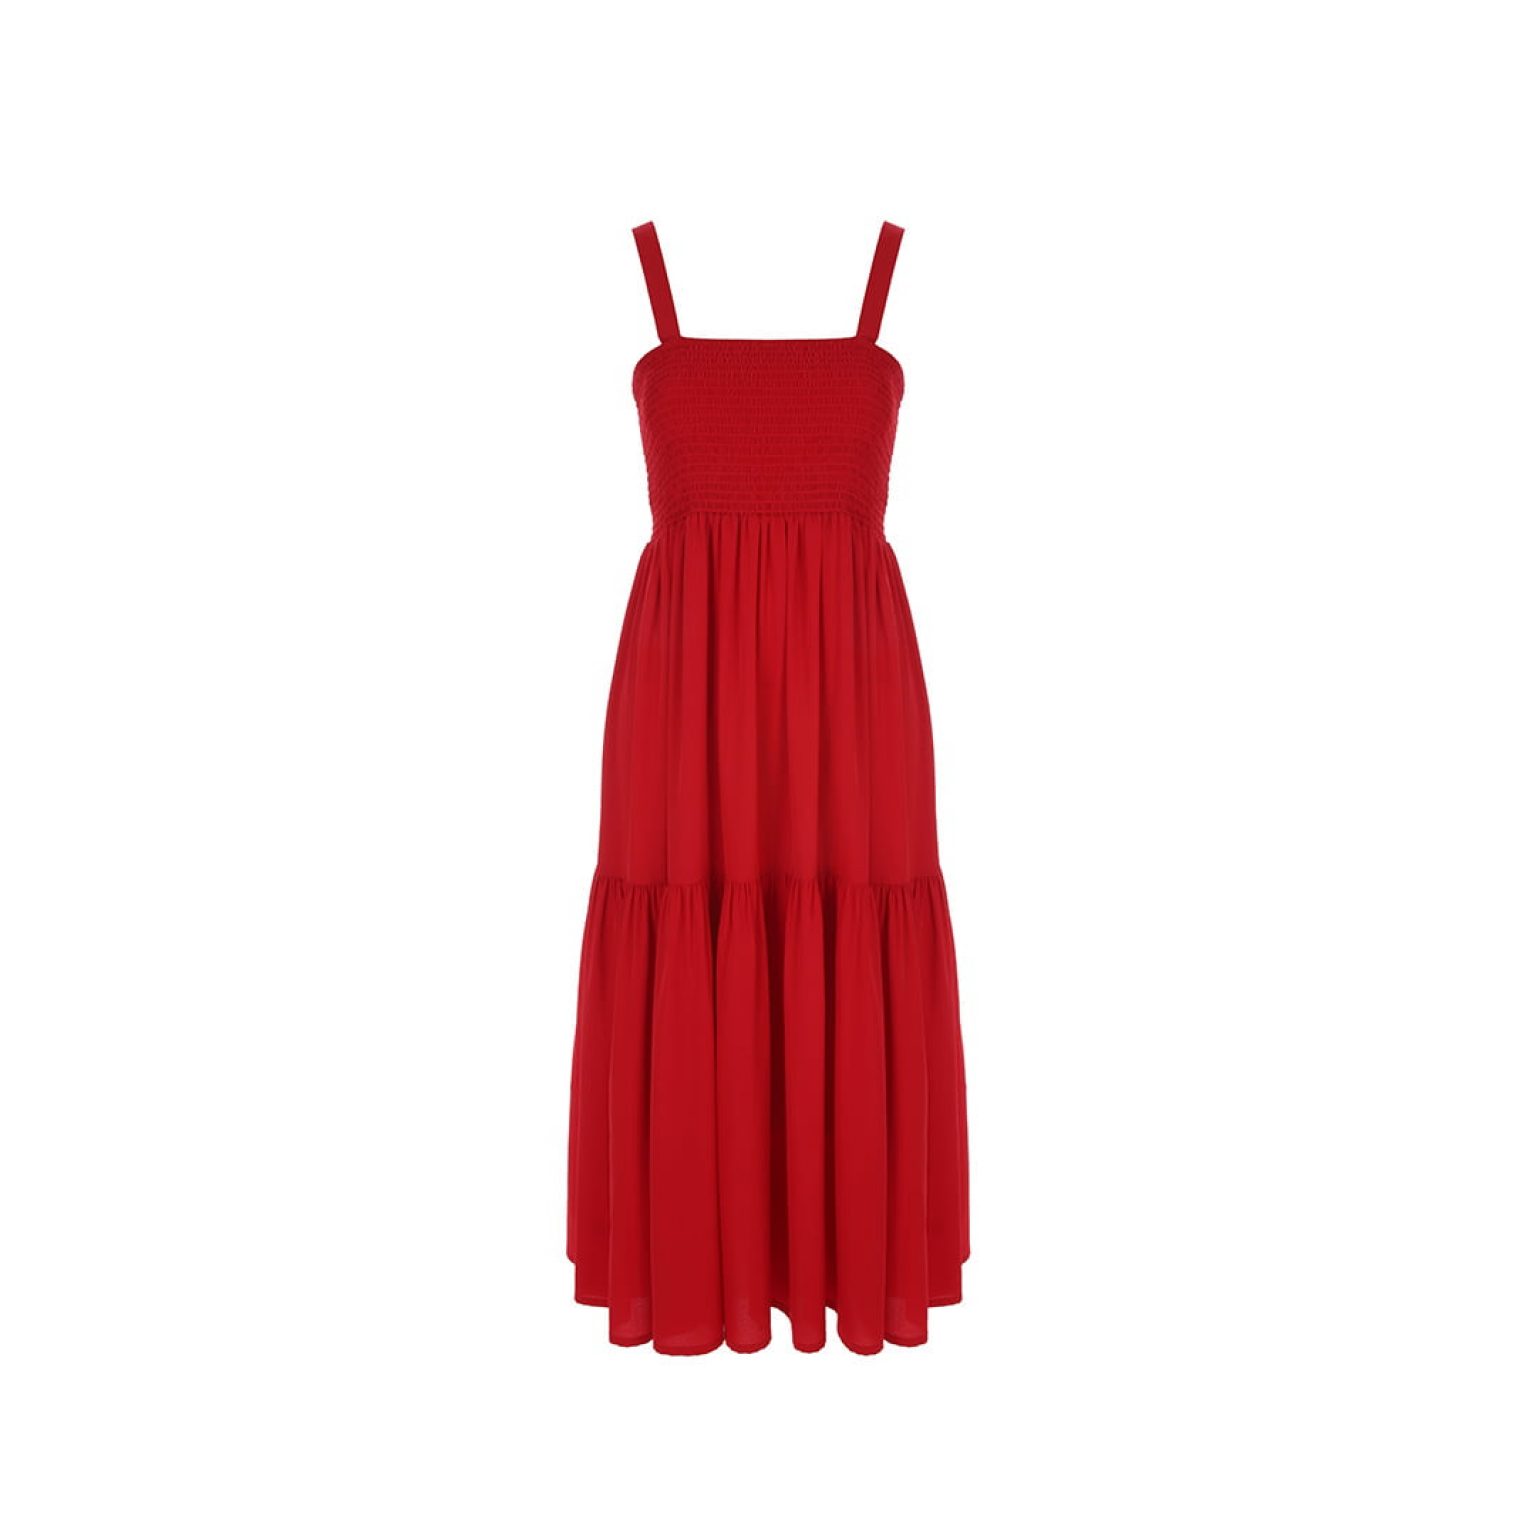 Peacocks - Red Midi Dress